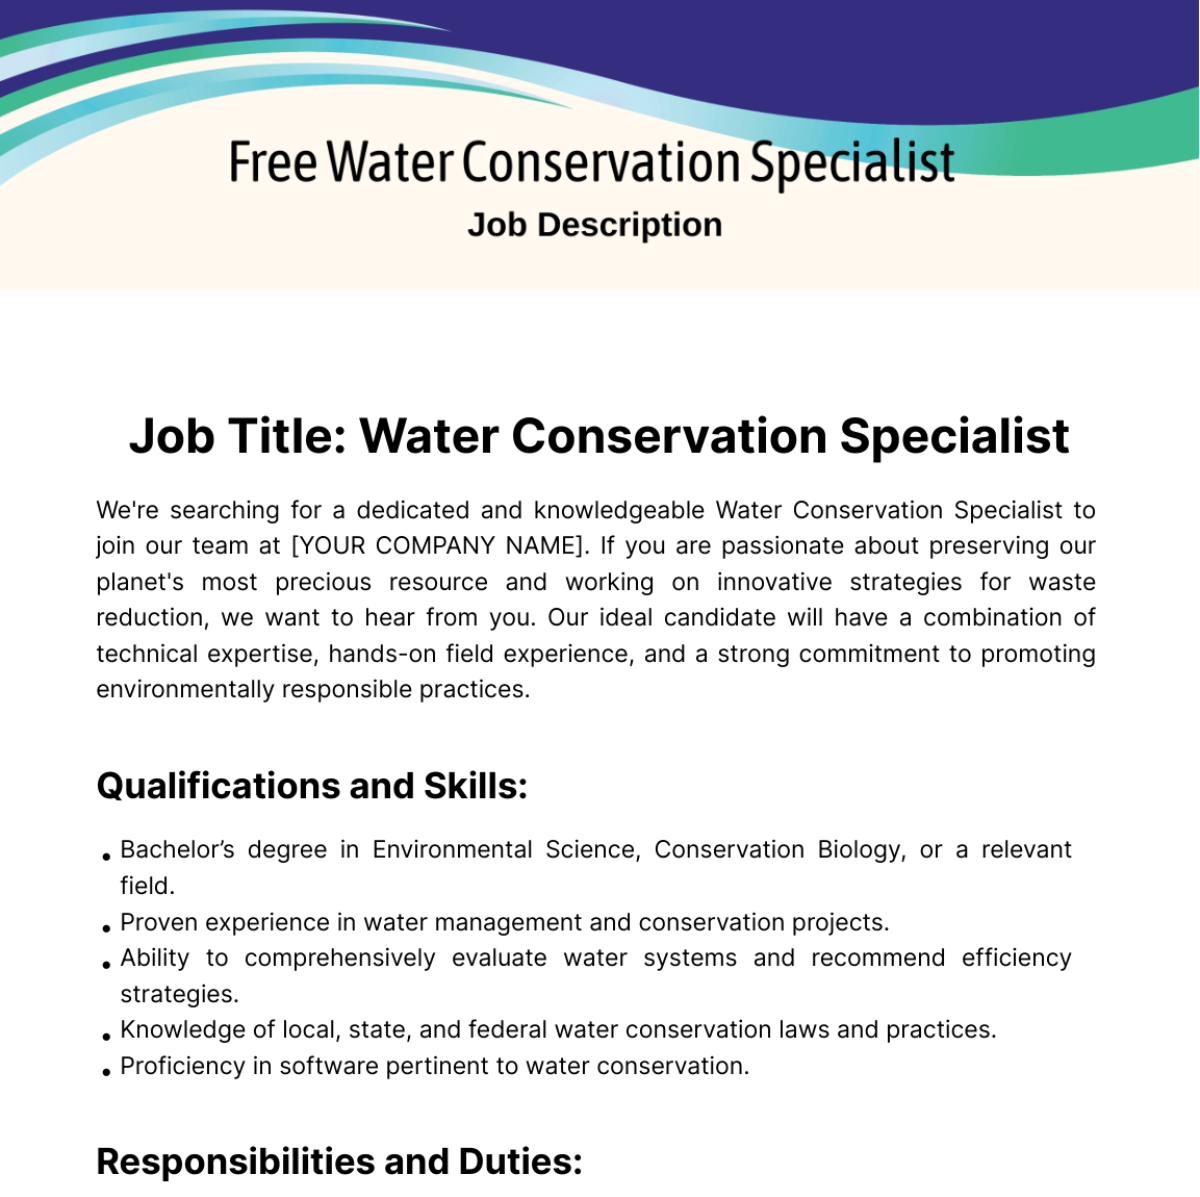 Free Water Conservation Specialist Job Description Template